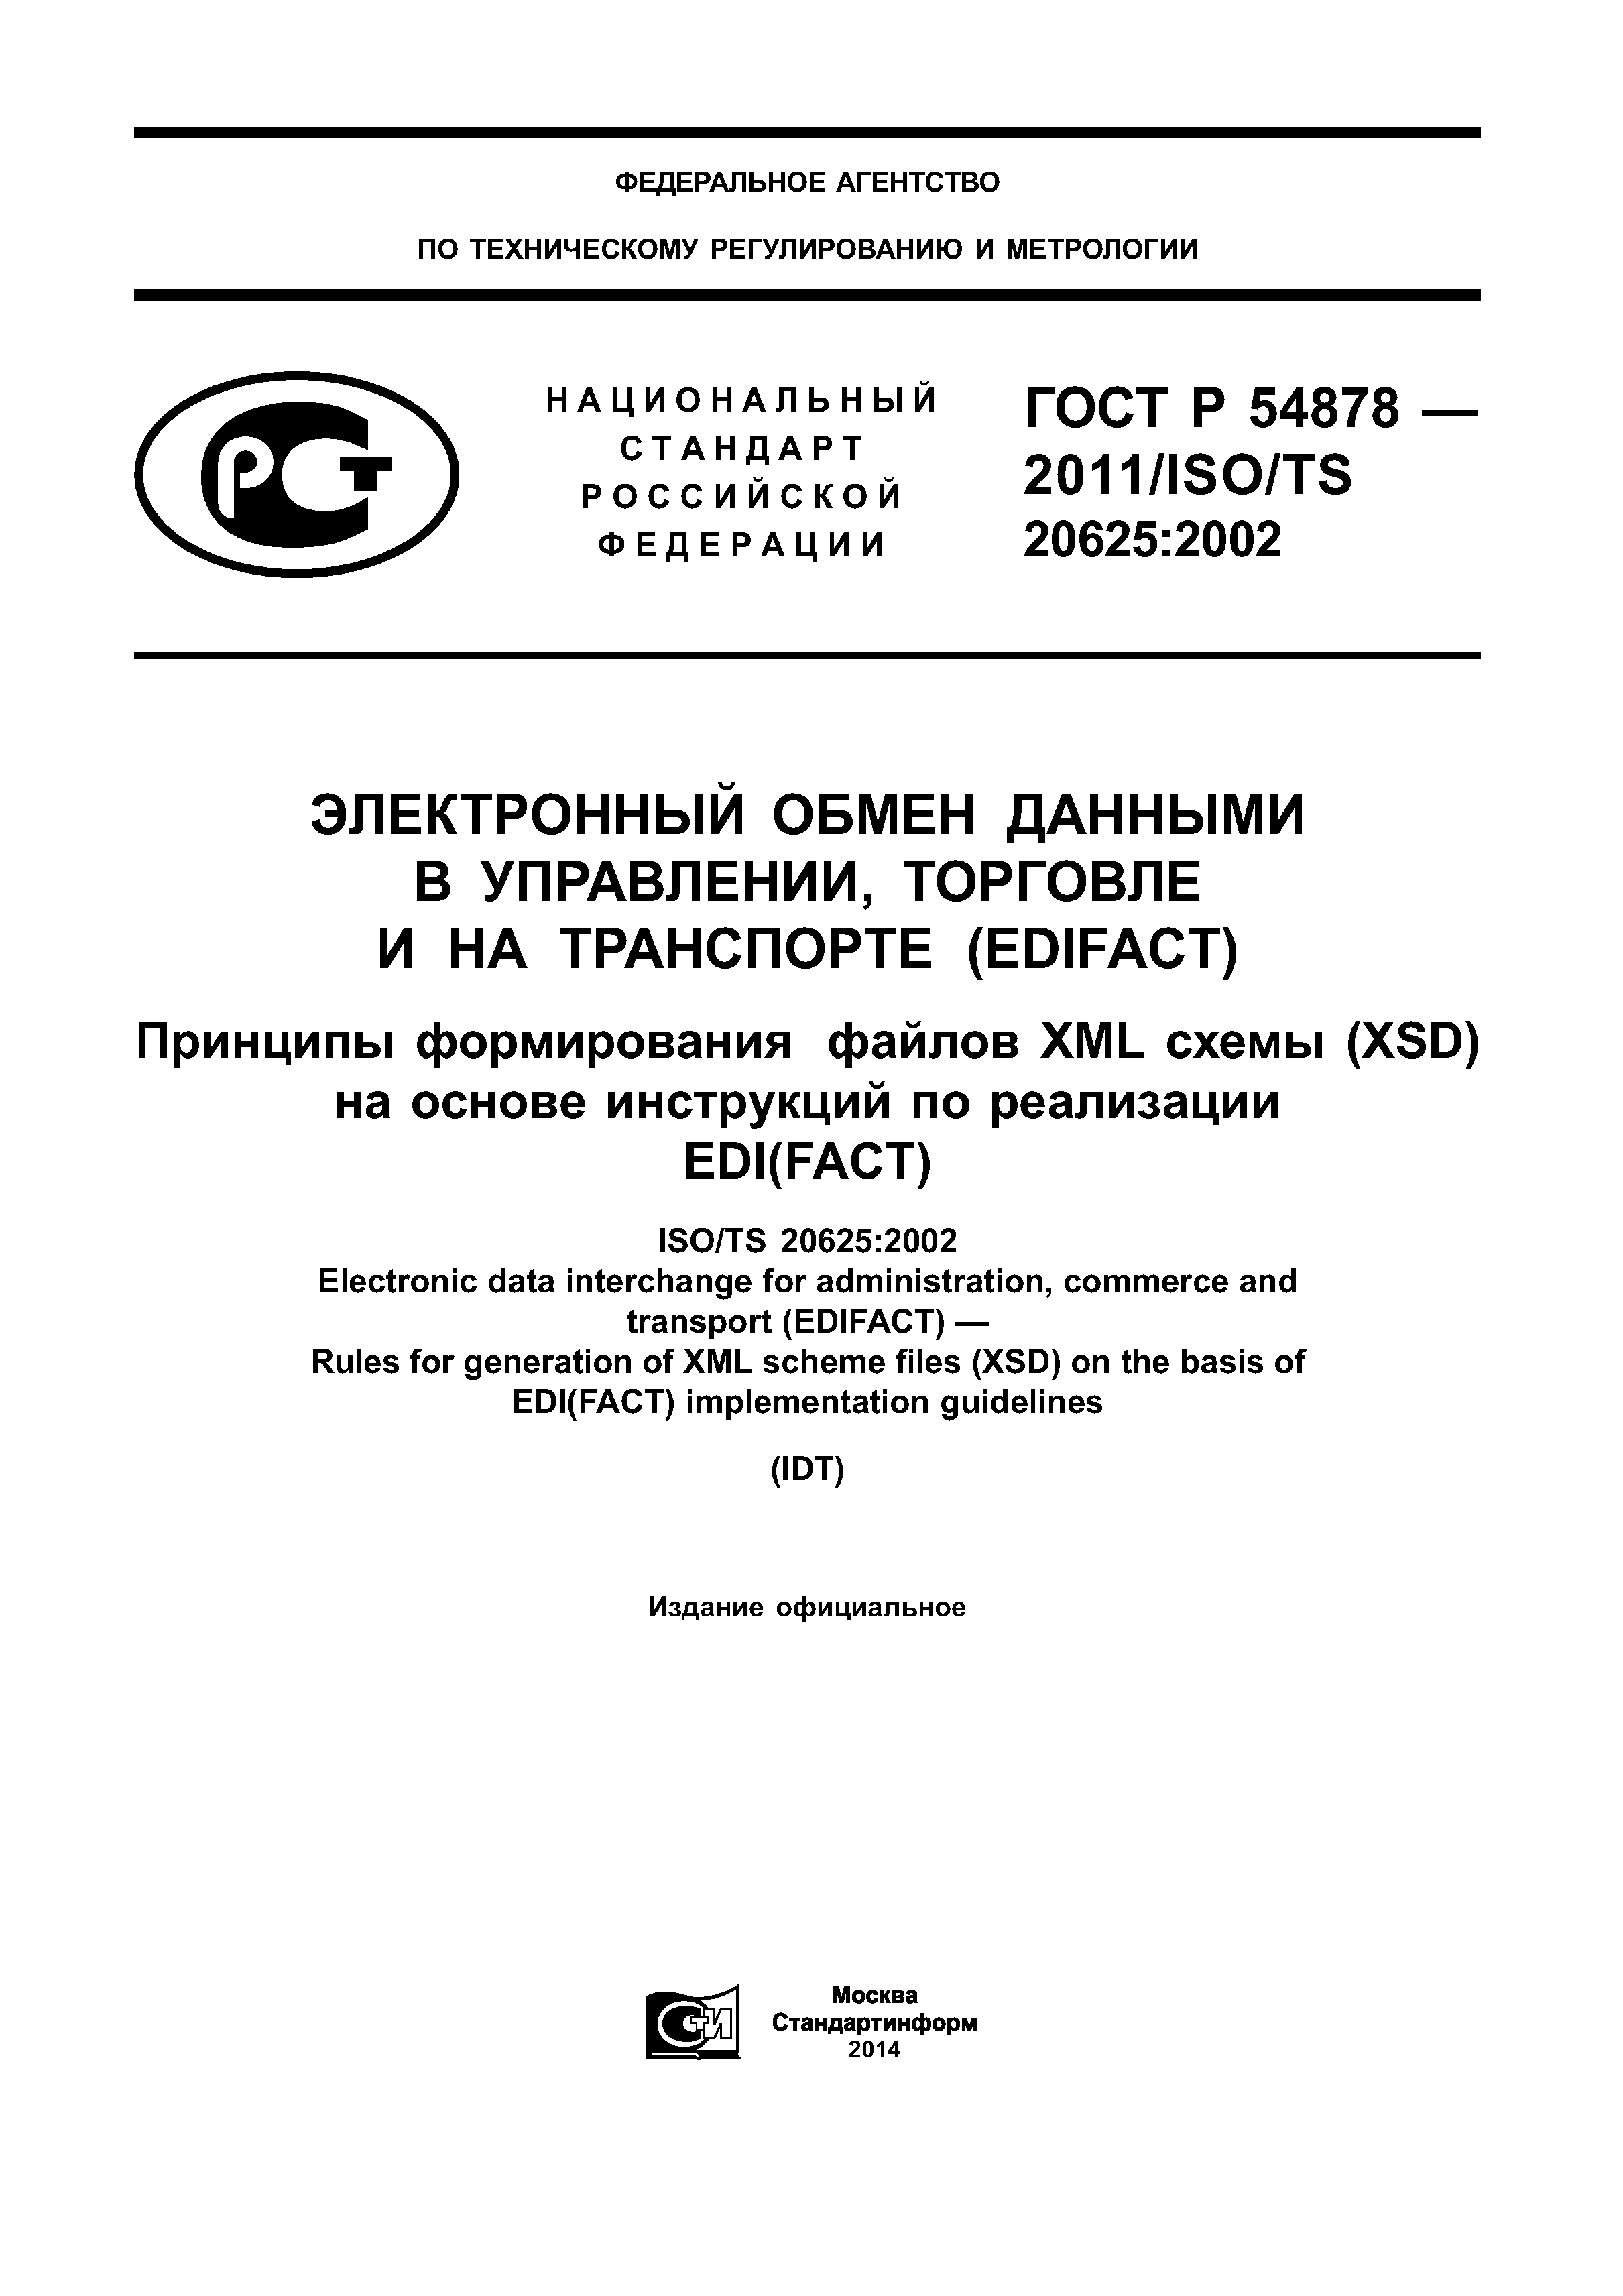 ГОСТ Р 54878-2011